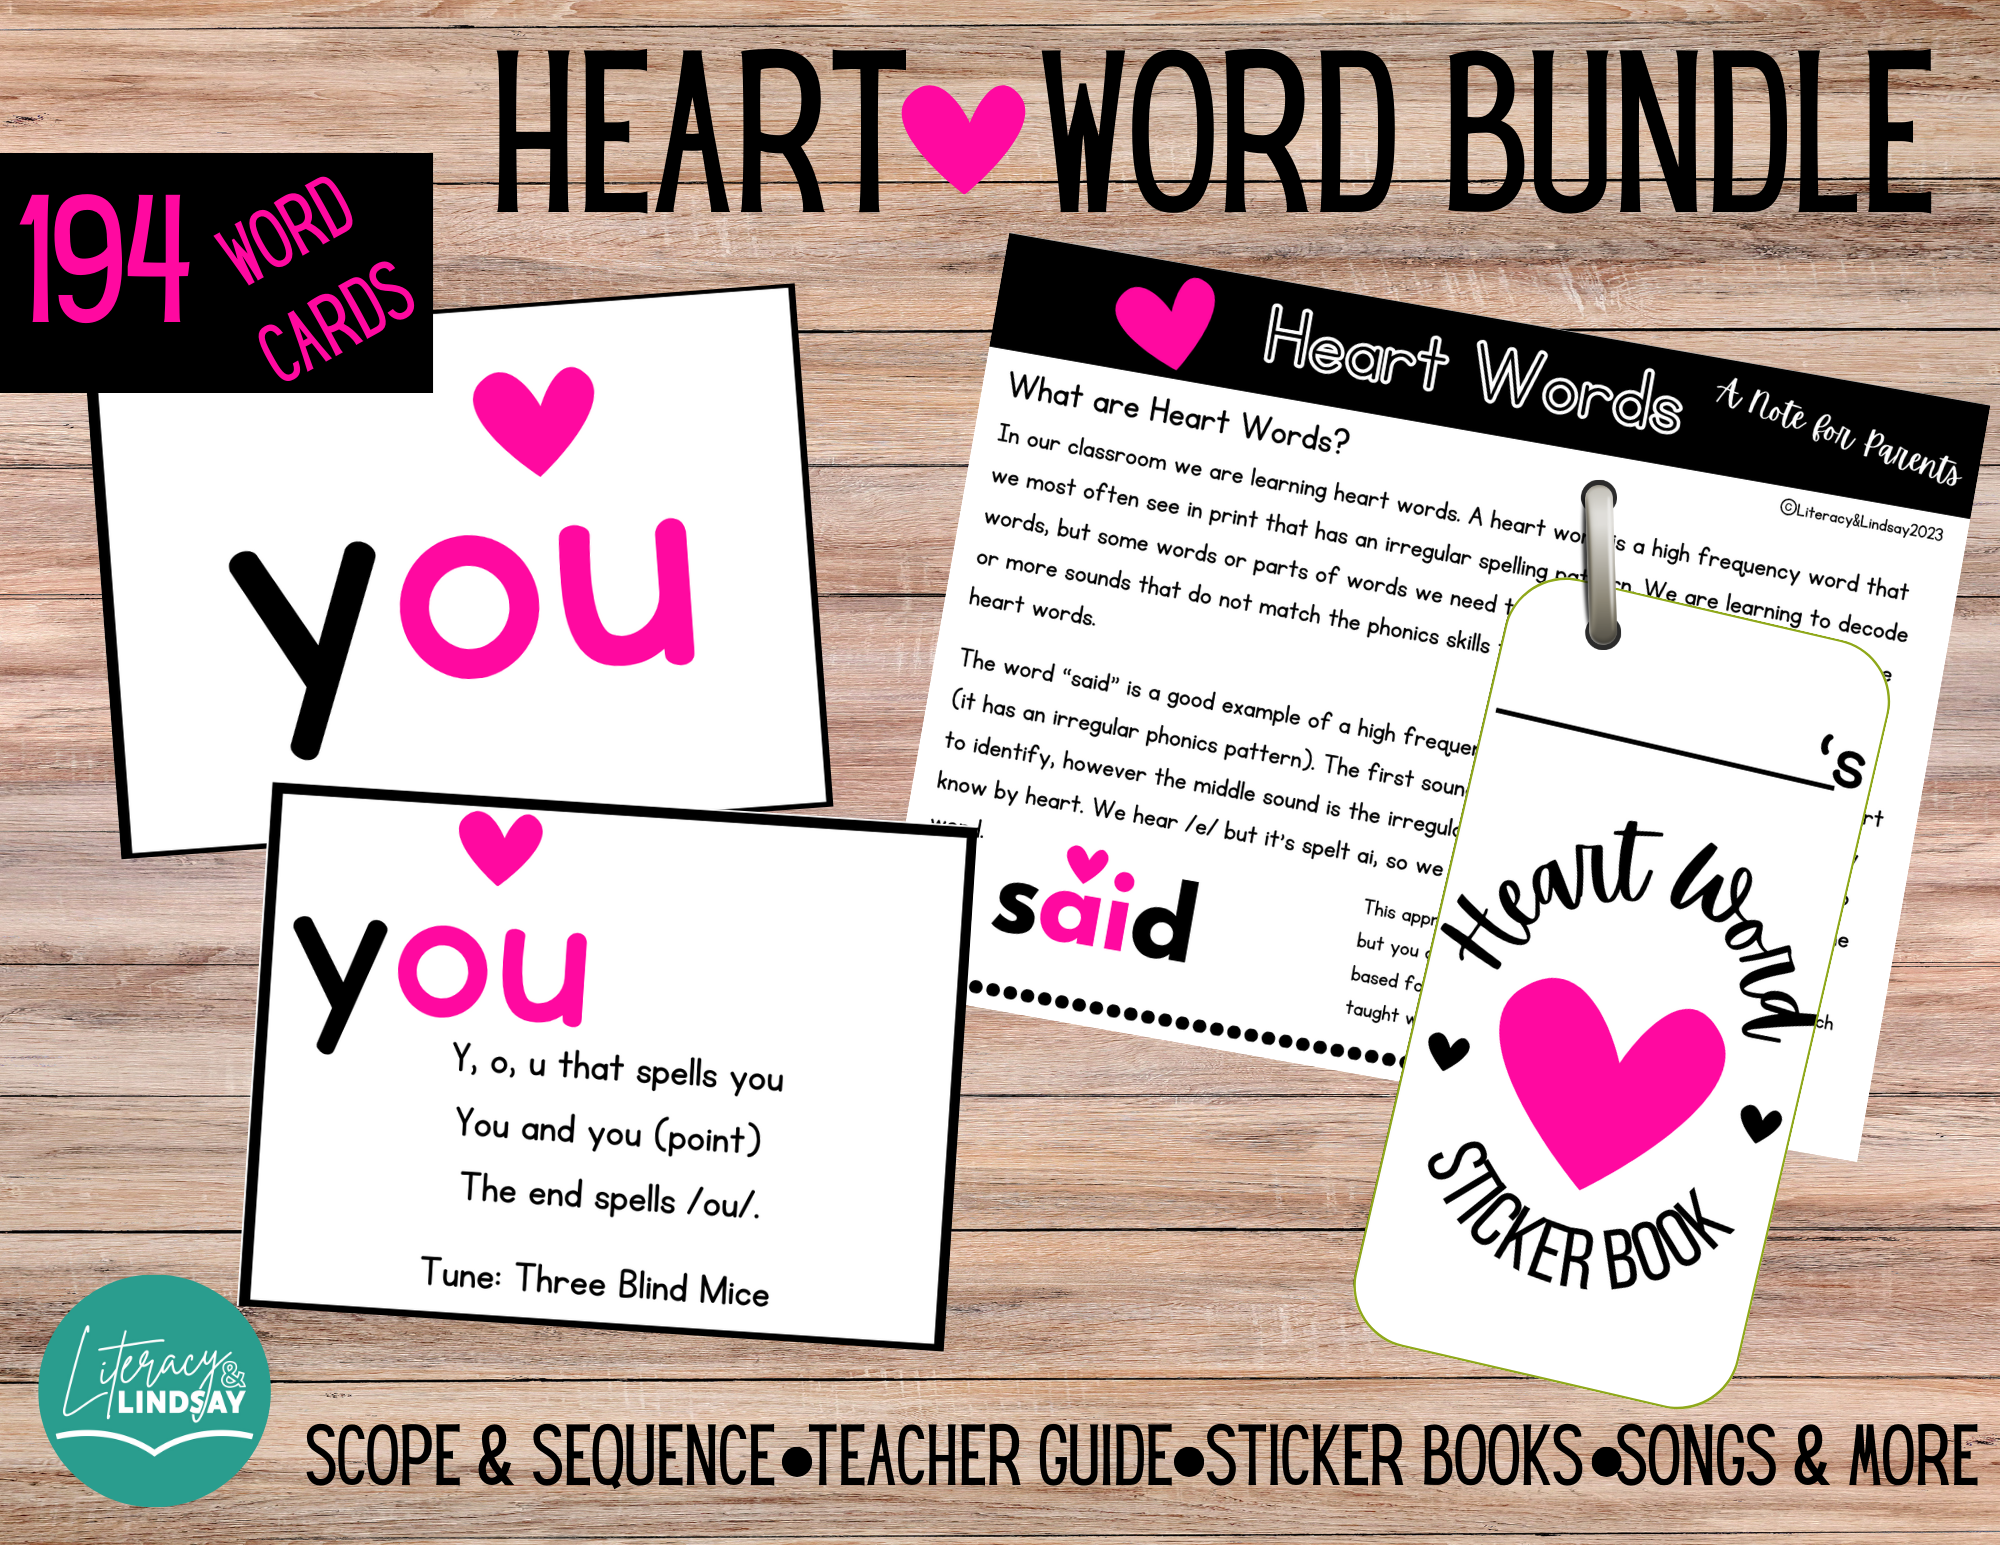 Heart Word Bundle - Songs to teach Heart Words